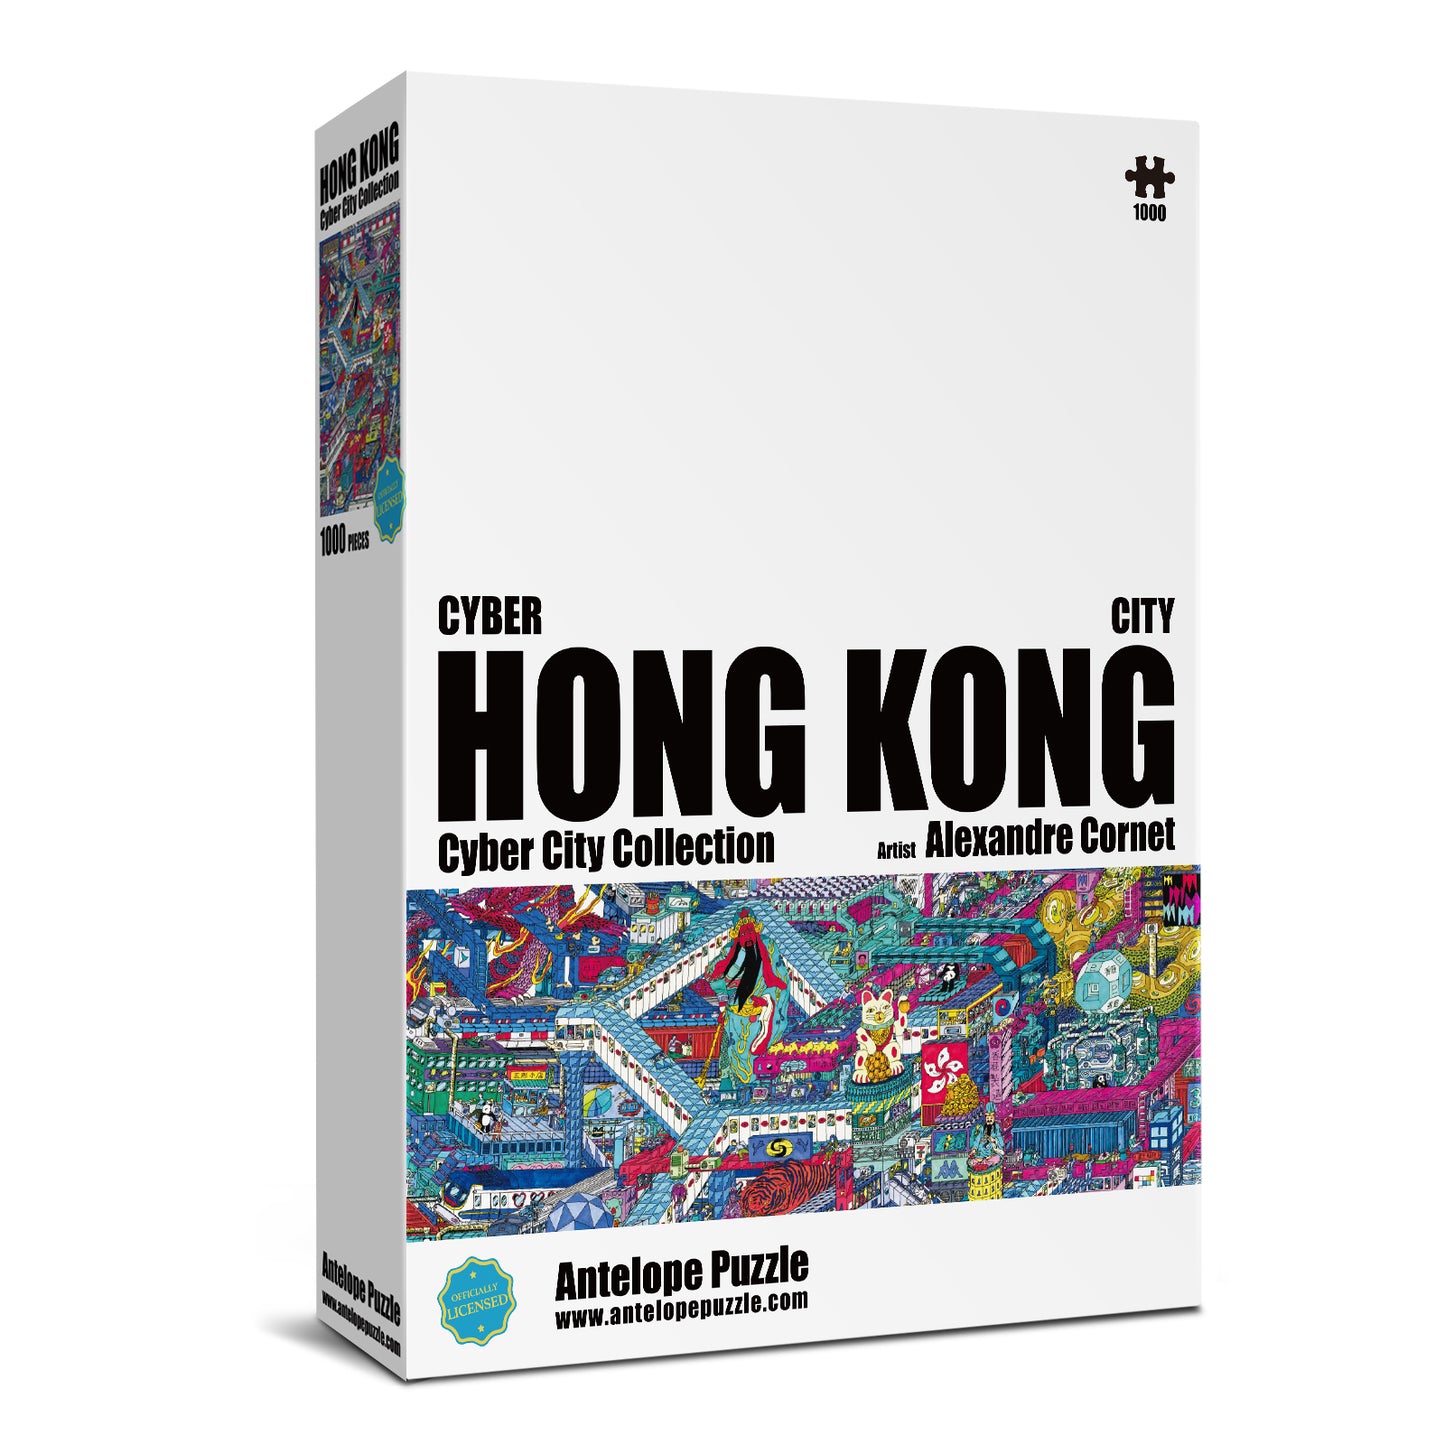 Cyber Hong Kong City 1000 Piece Jigsaw Puzzle